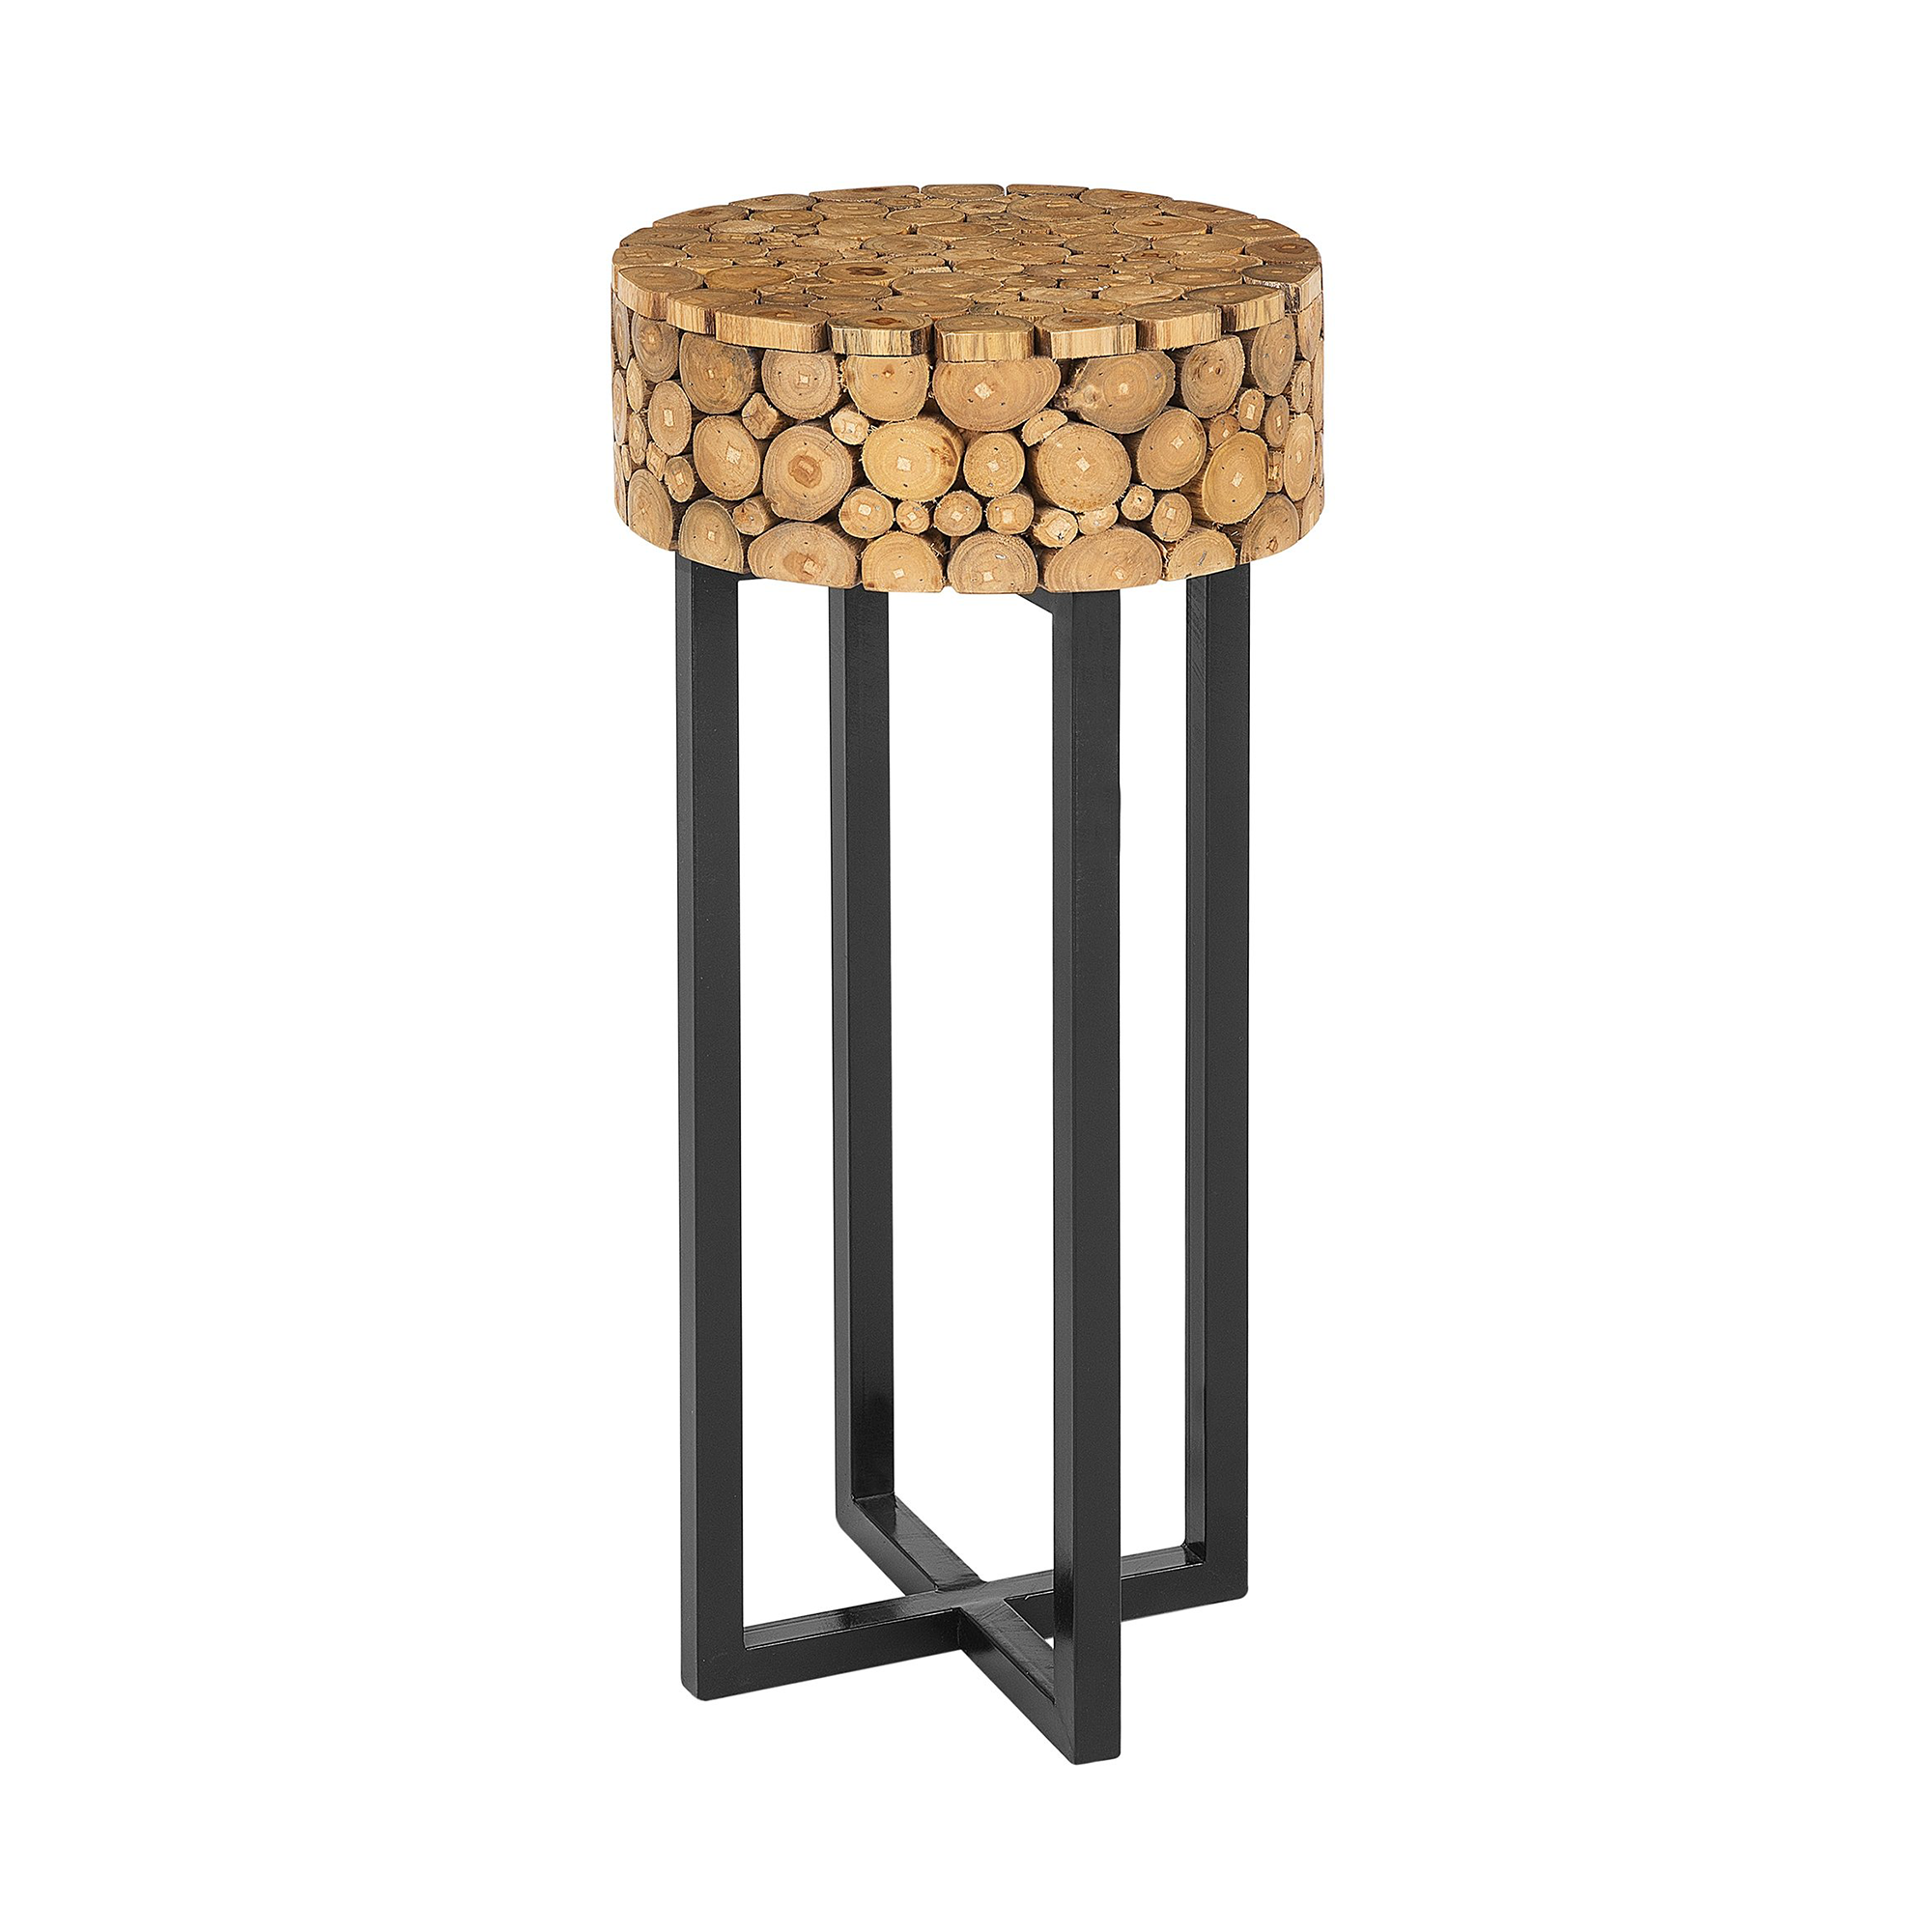 Beliani Side Table Light Wood Teak Top Black Legs 76 x 35 x 35 cm Industrial Rustic